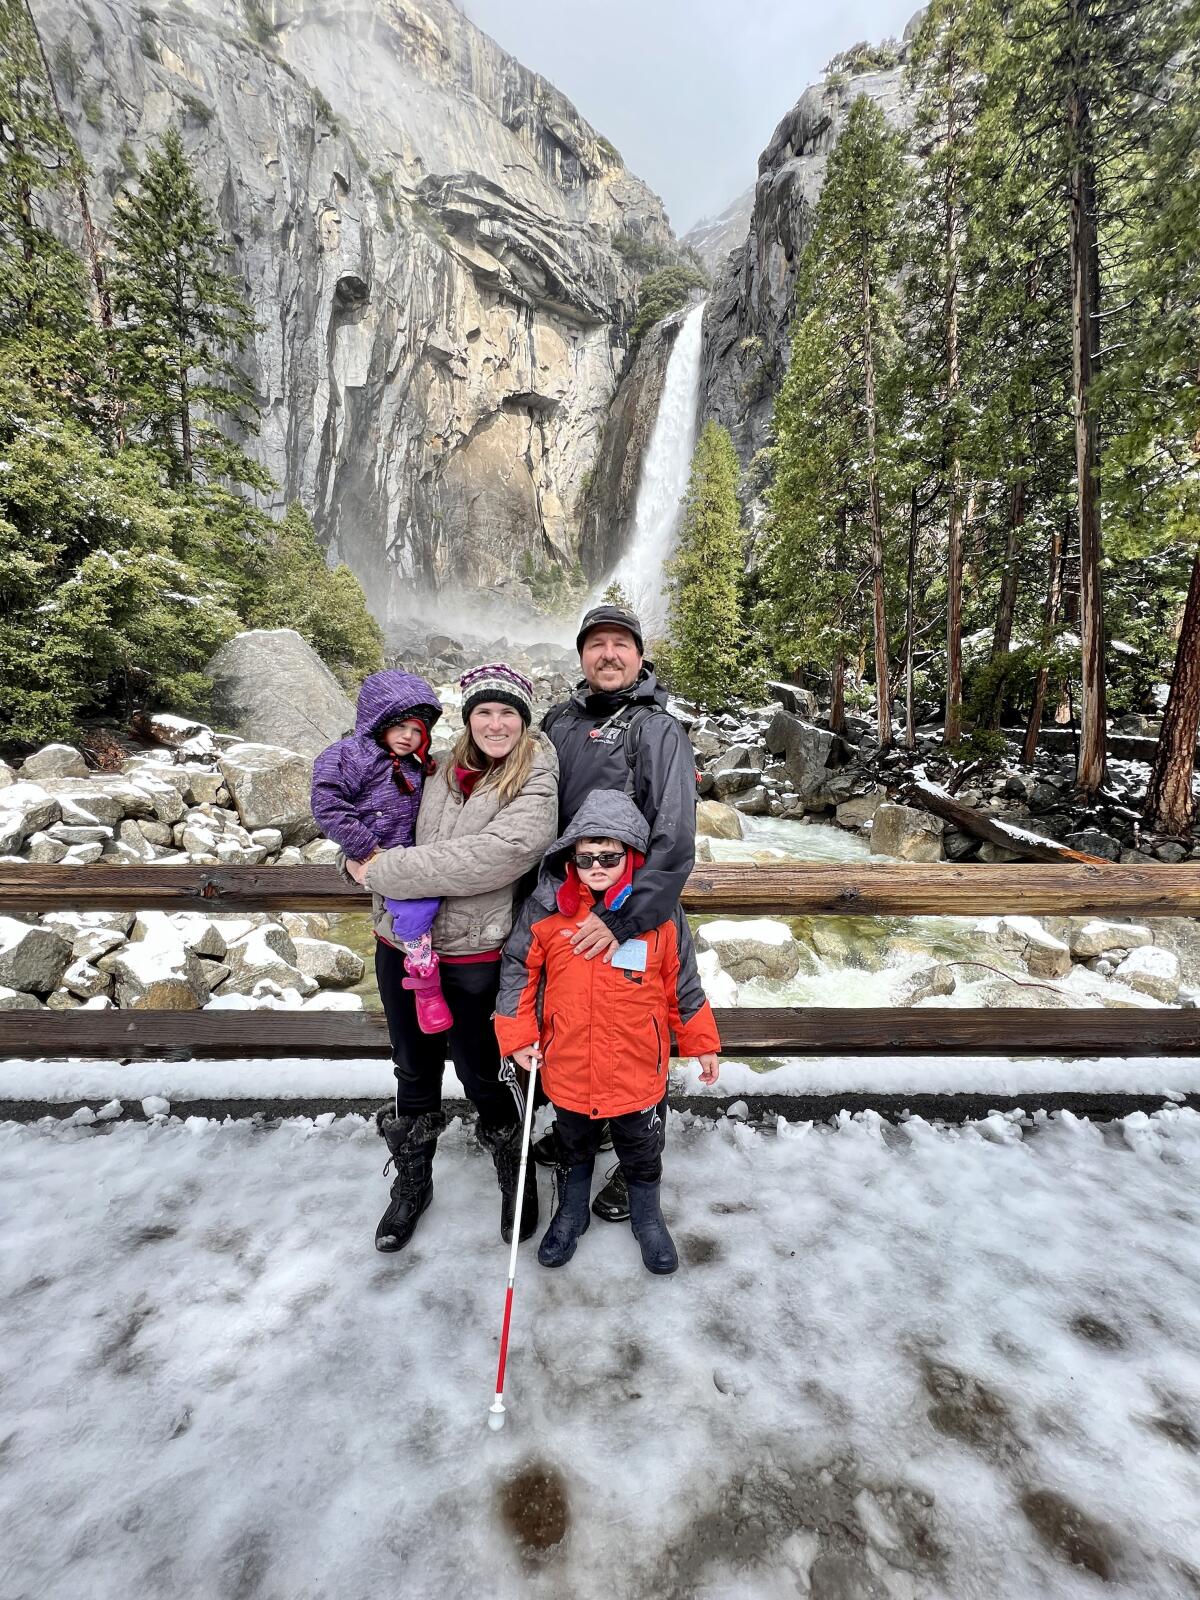 The Seitz family of Huntington Beach (Kirra, Katrina, Karl and Karl) at Lower Yosemite Falls.